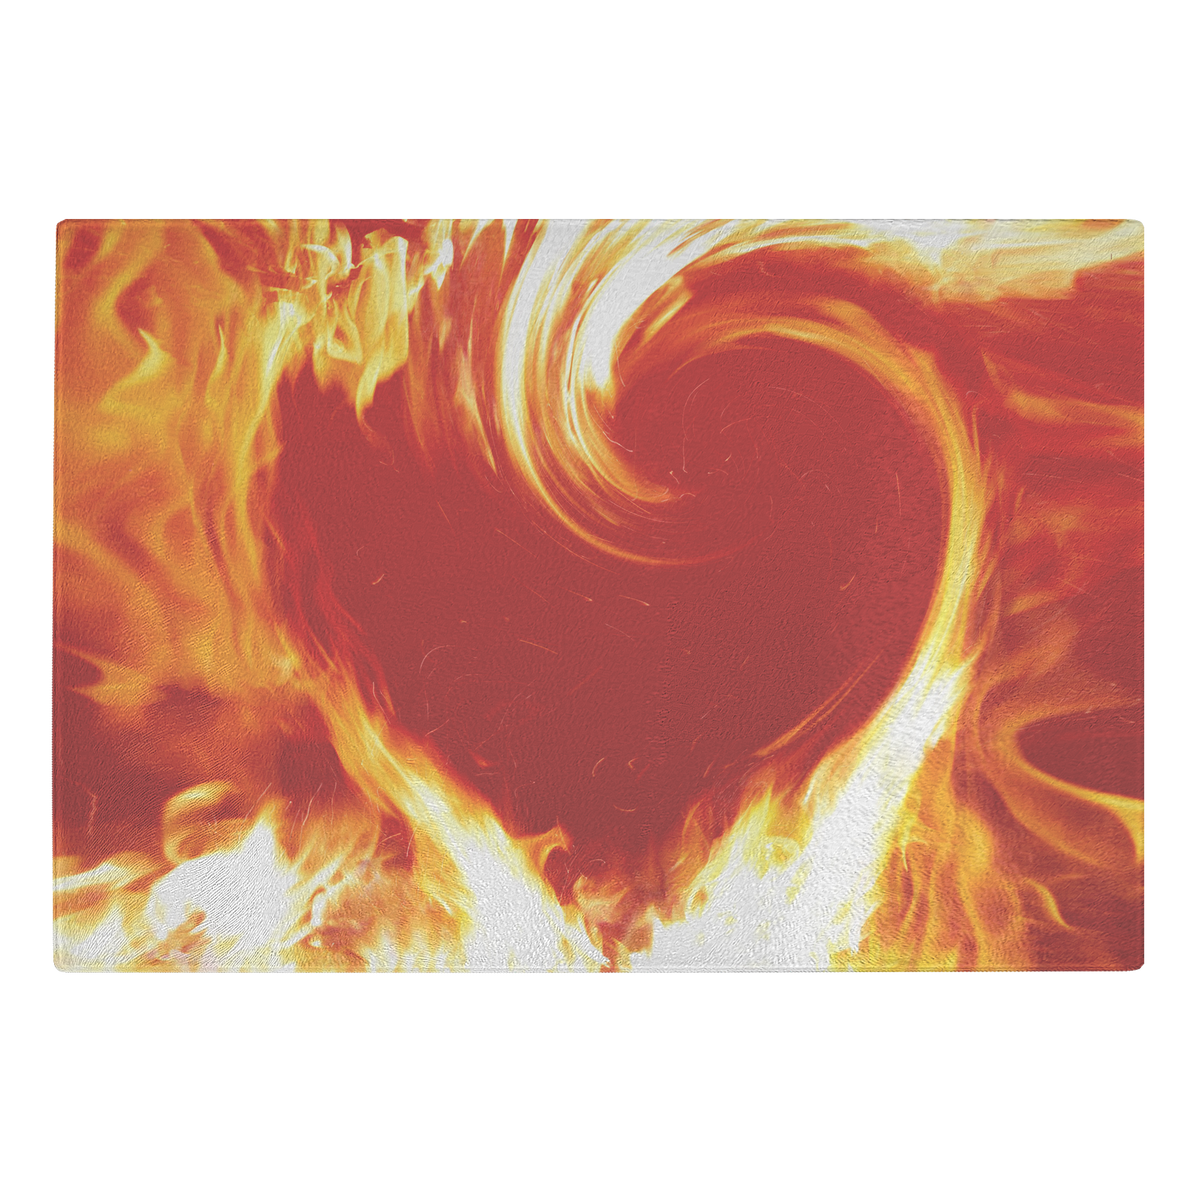 Fiery heat oh I meant heart - Glass cutting board